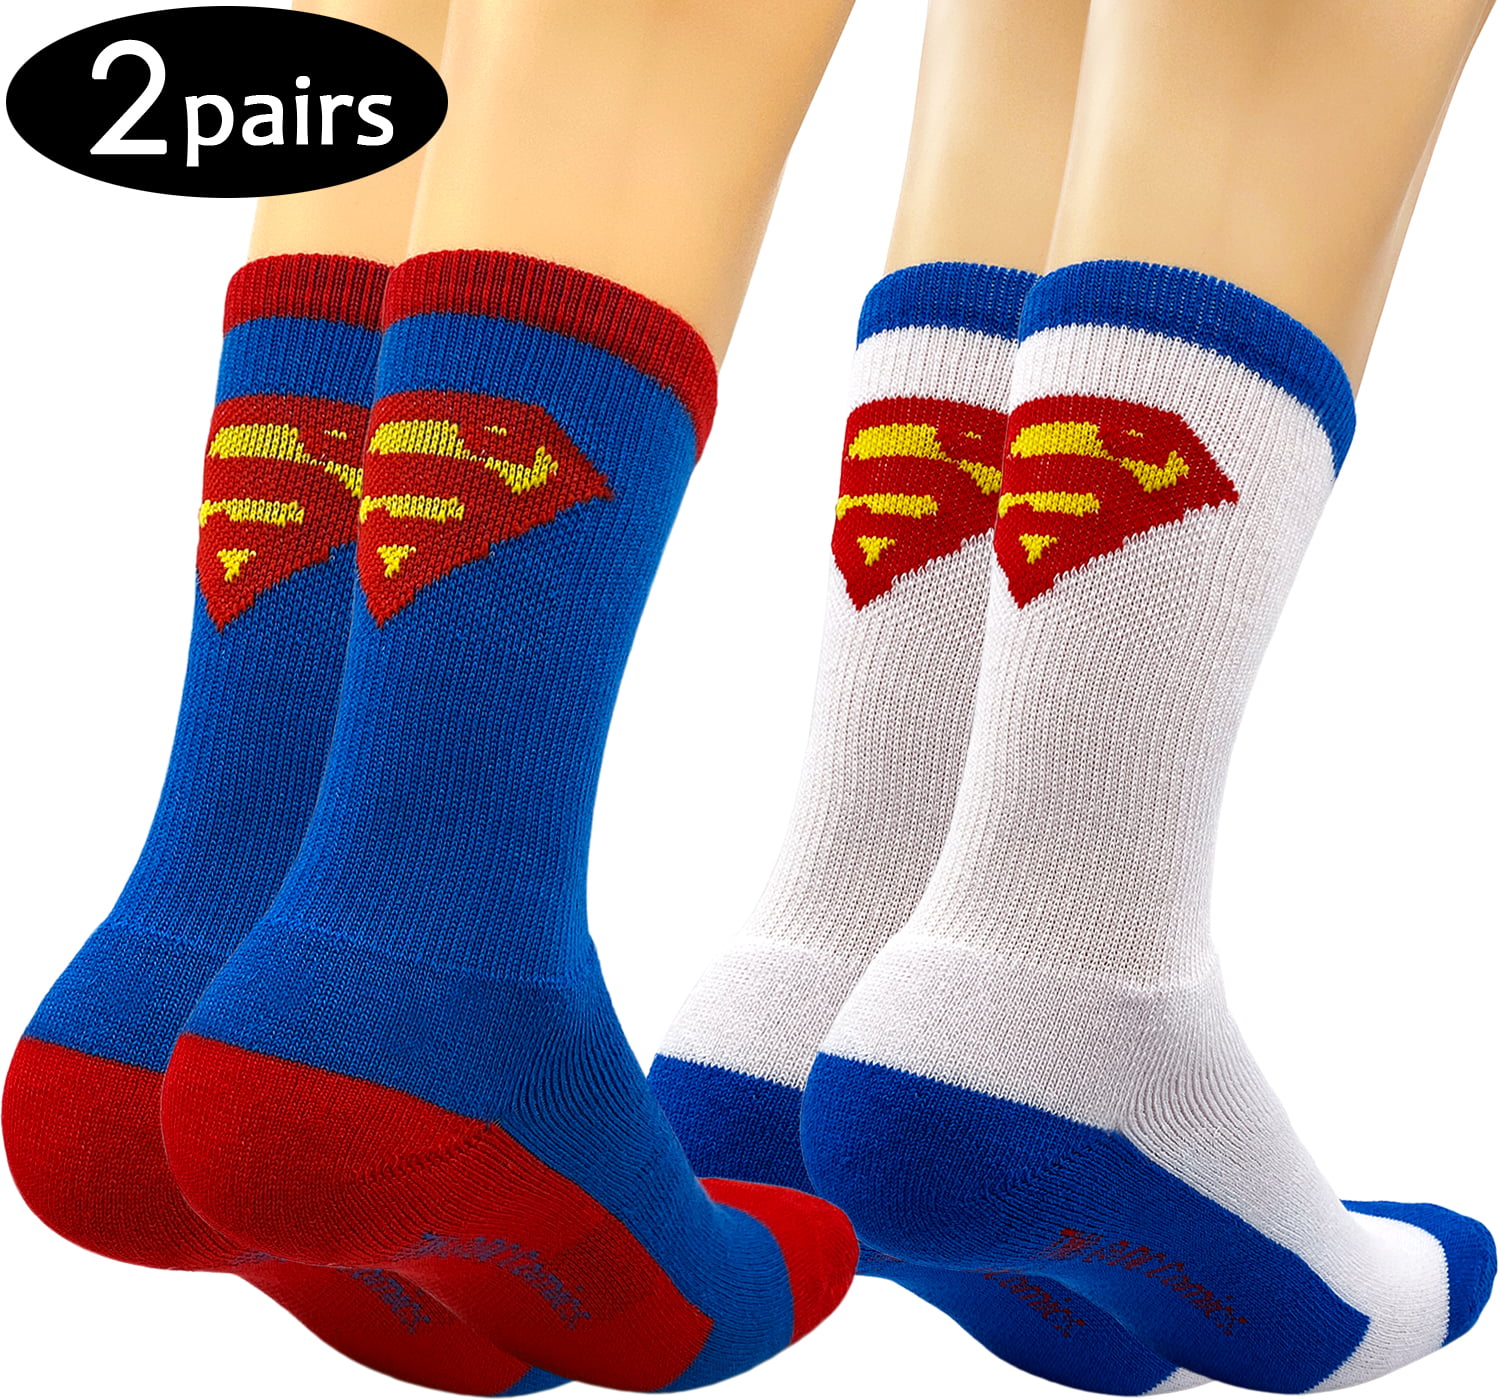 Superman Super Dad Adult Crew Socks Blue